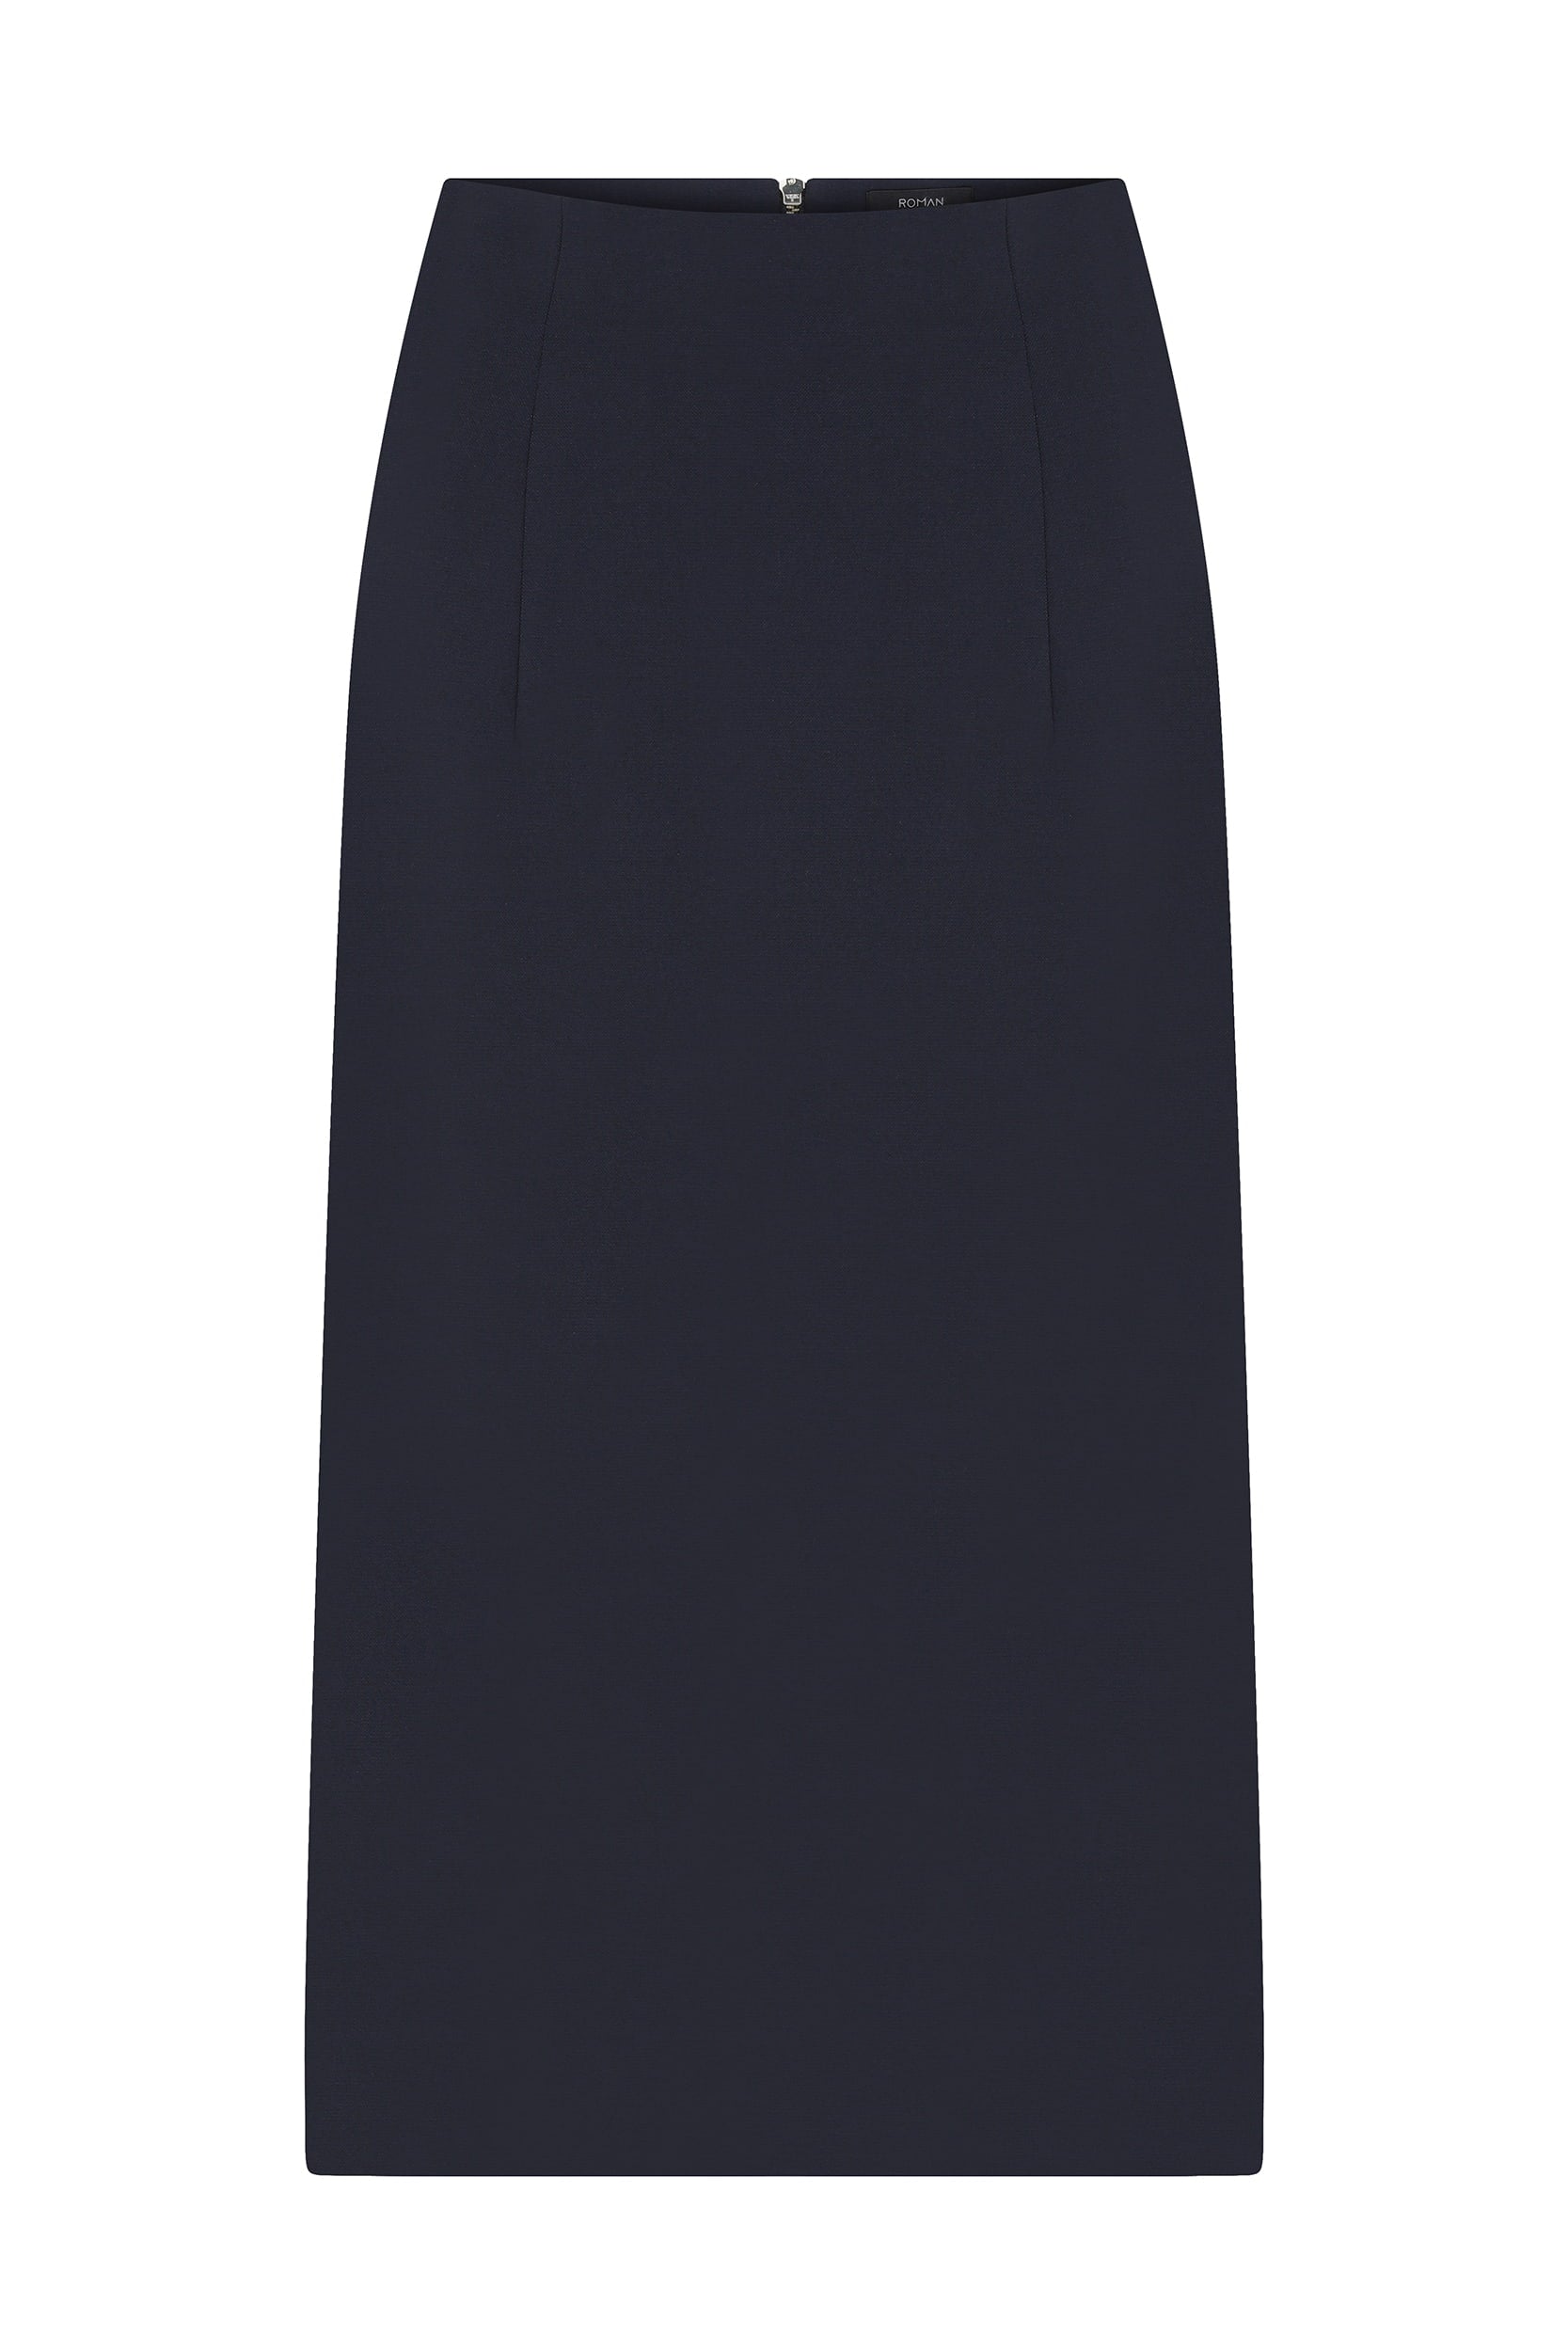 John Lewis Girls' Adjustable Waist Stain Resistant Panel Pleated School  Skirt, Navy at John Lewis & Partners